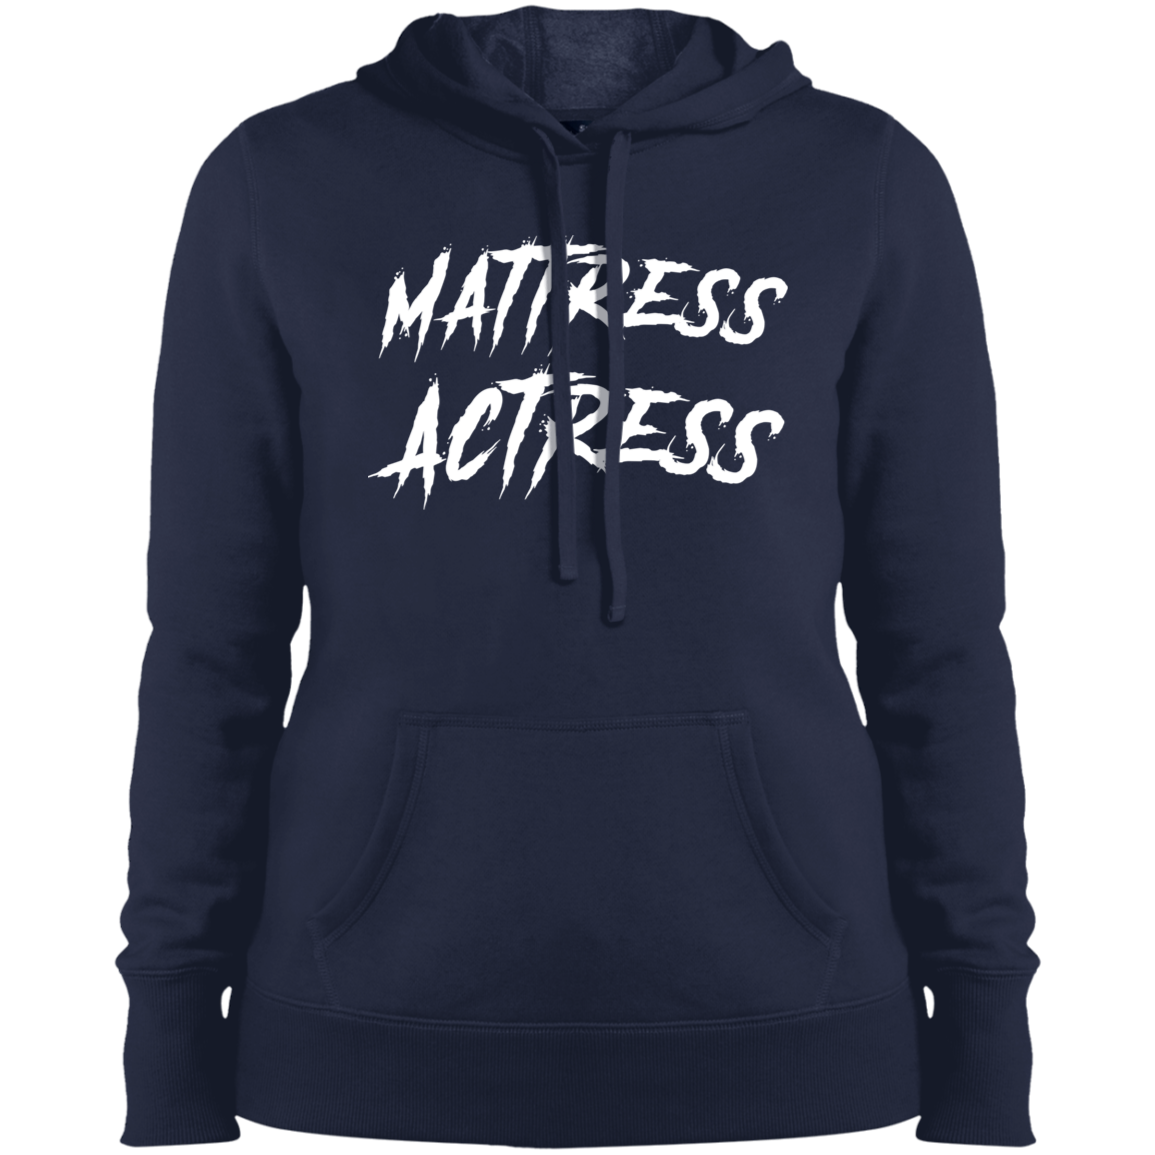 "Mattress Actress" Ladies' Pullover Hooded Sweatshirt